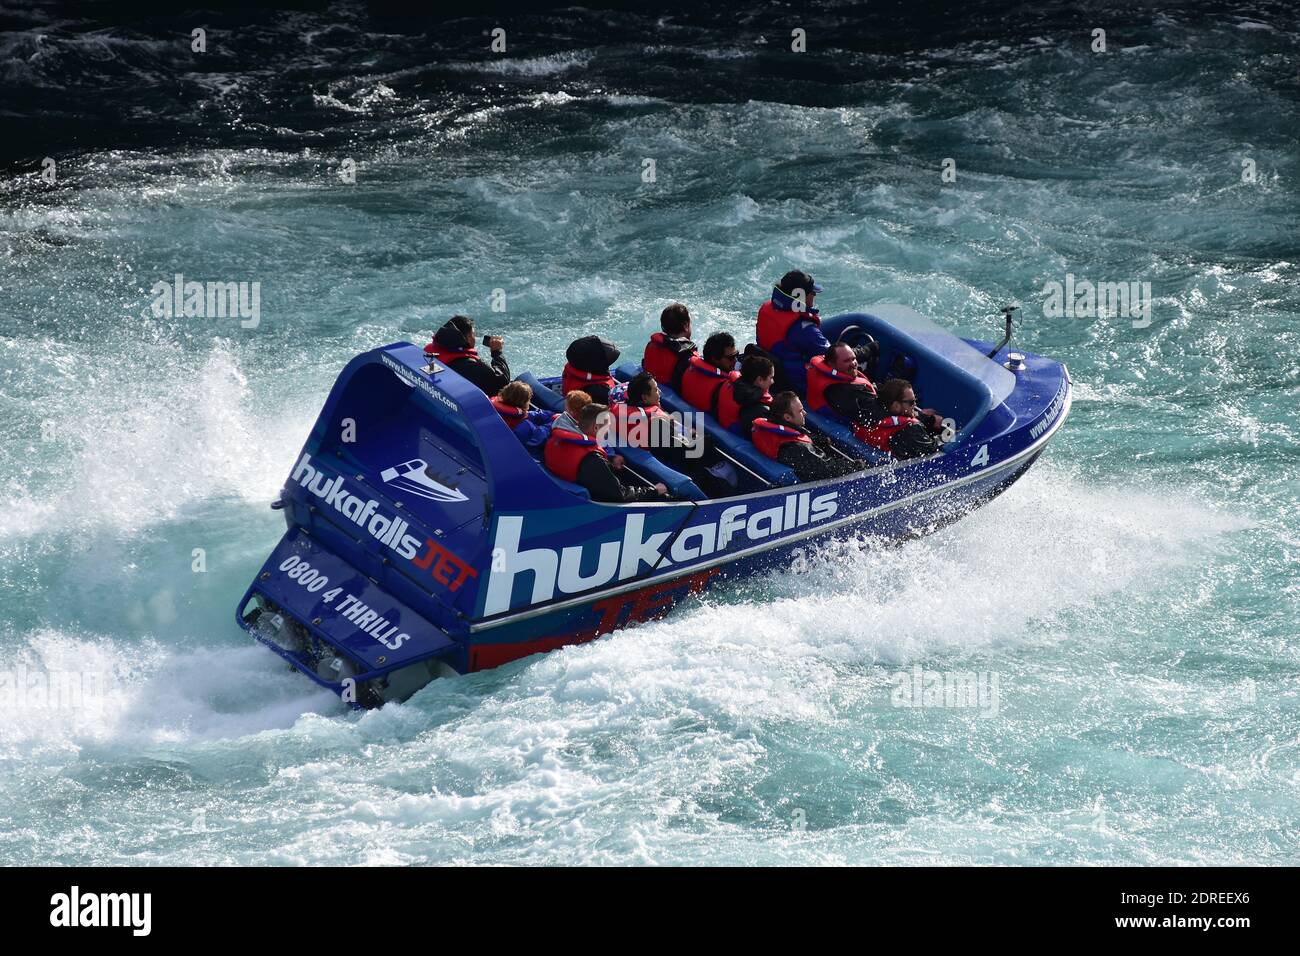 Tourist jet boat of Huka Falls riding fast through rough water of Waikato River. Stock Photo